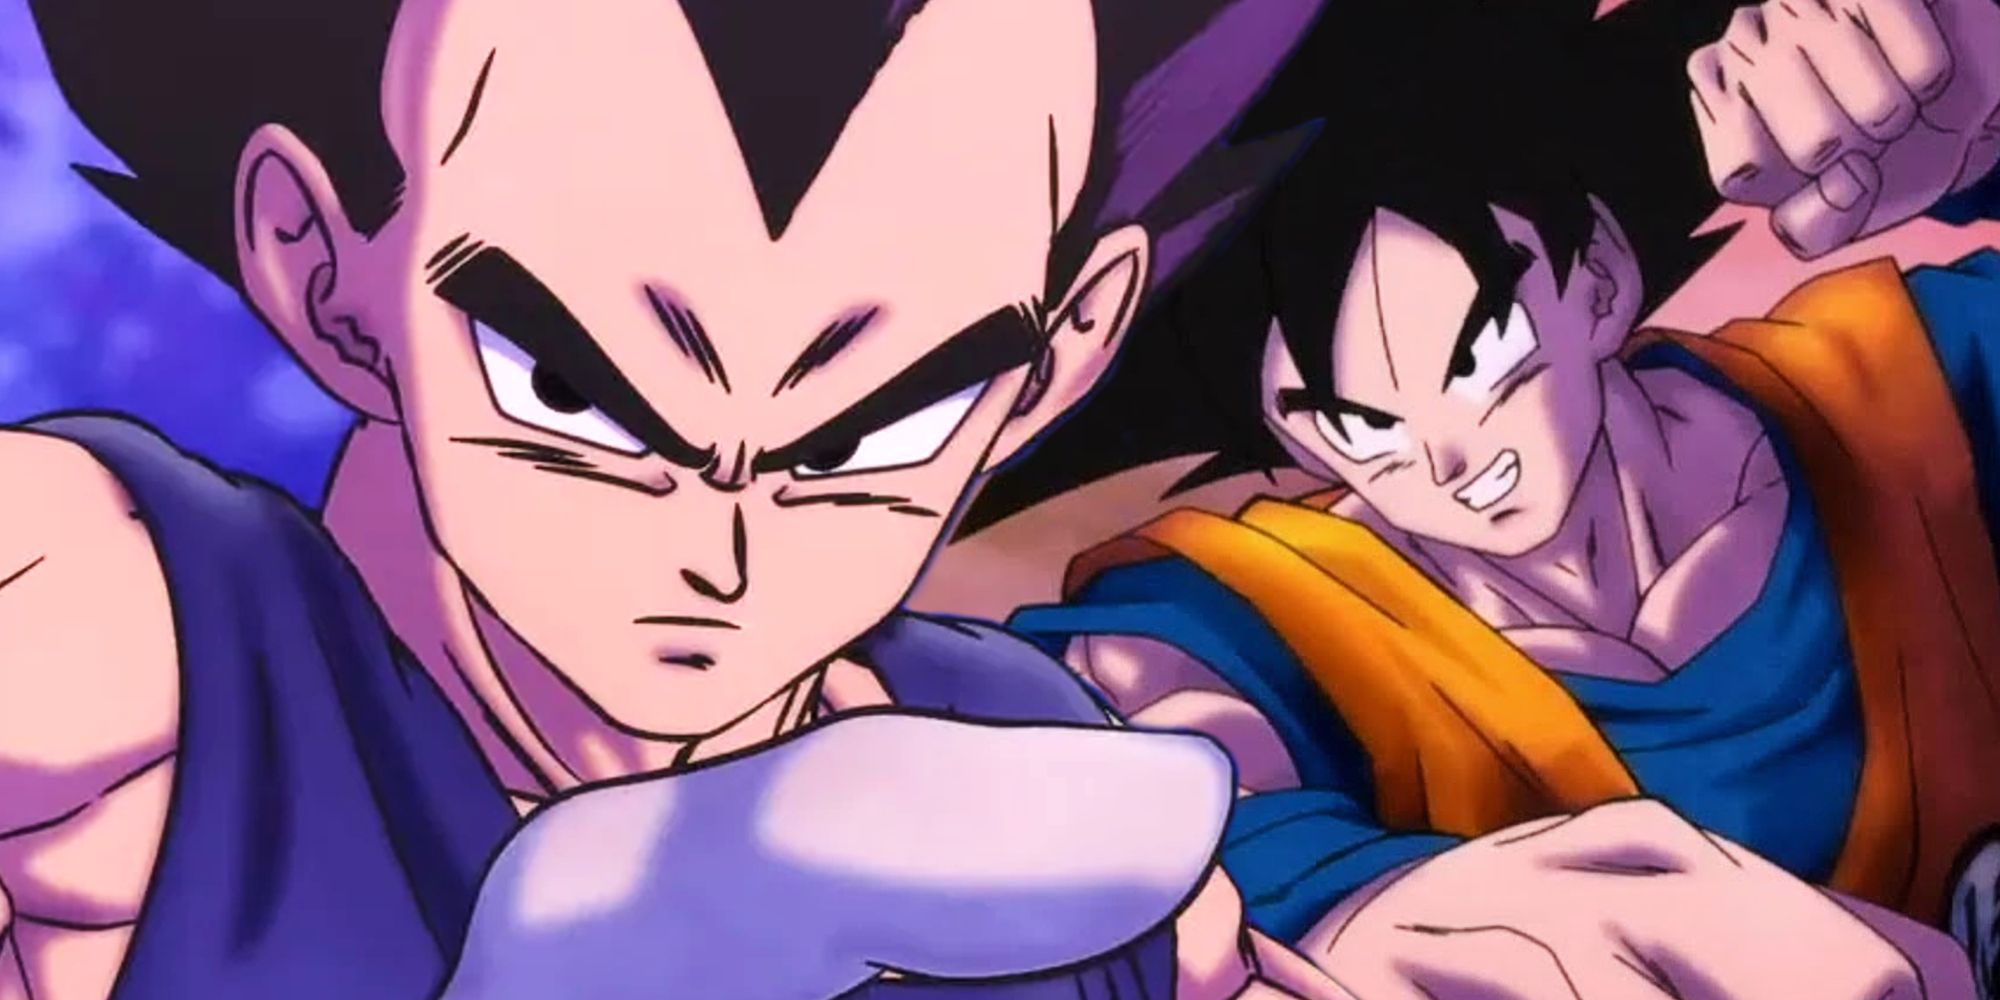 Dragon Ball Super: Super Hero's Way Around Goku & Vegeta is Just Lazy